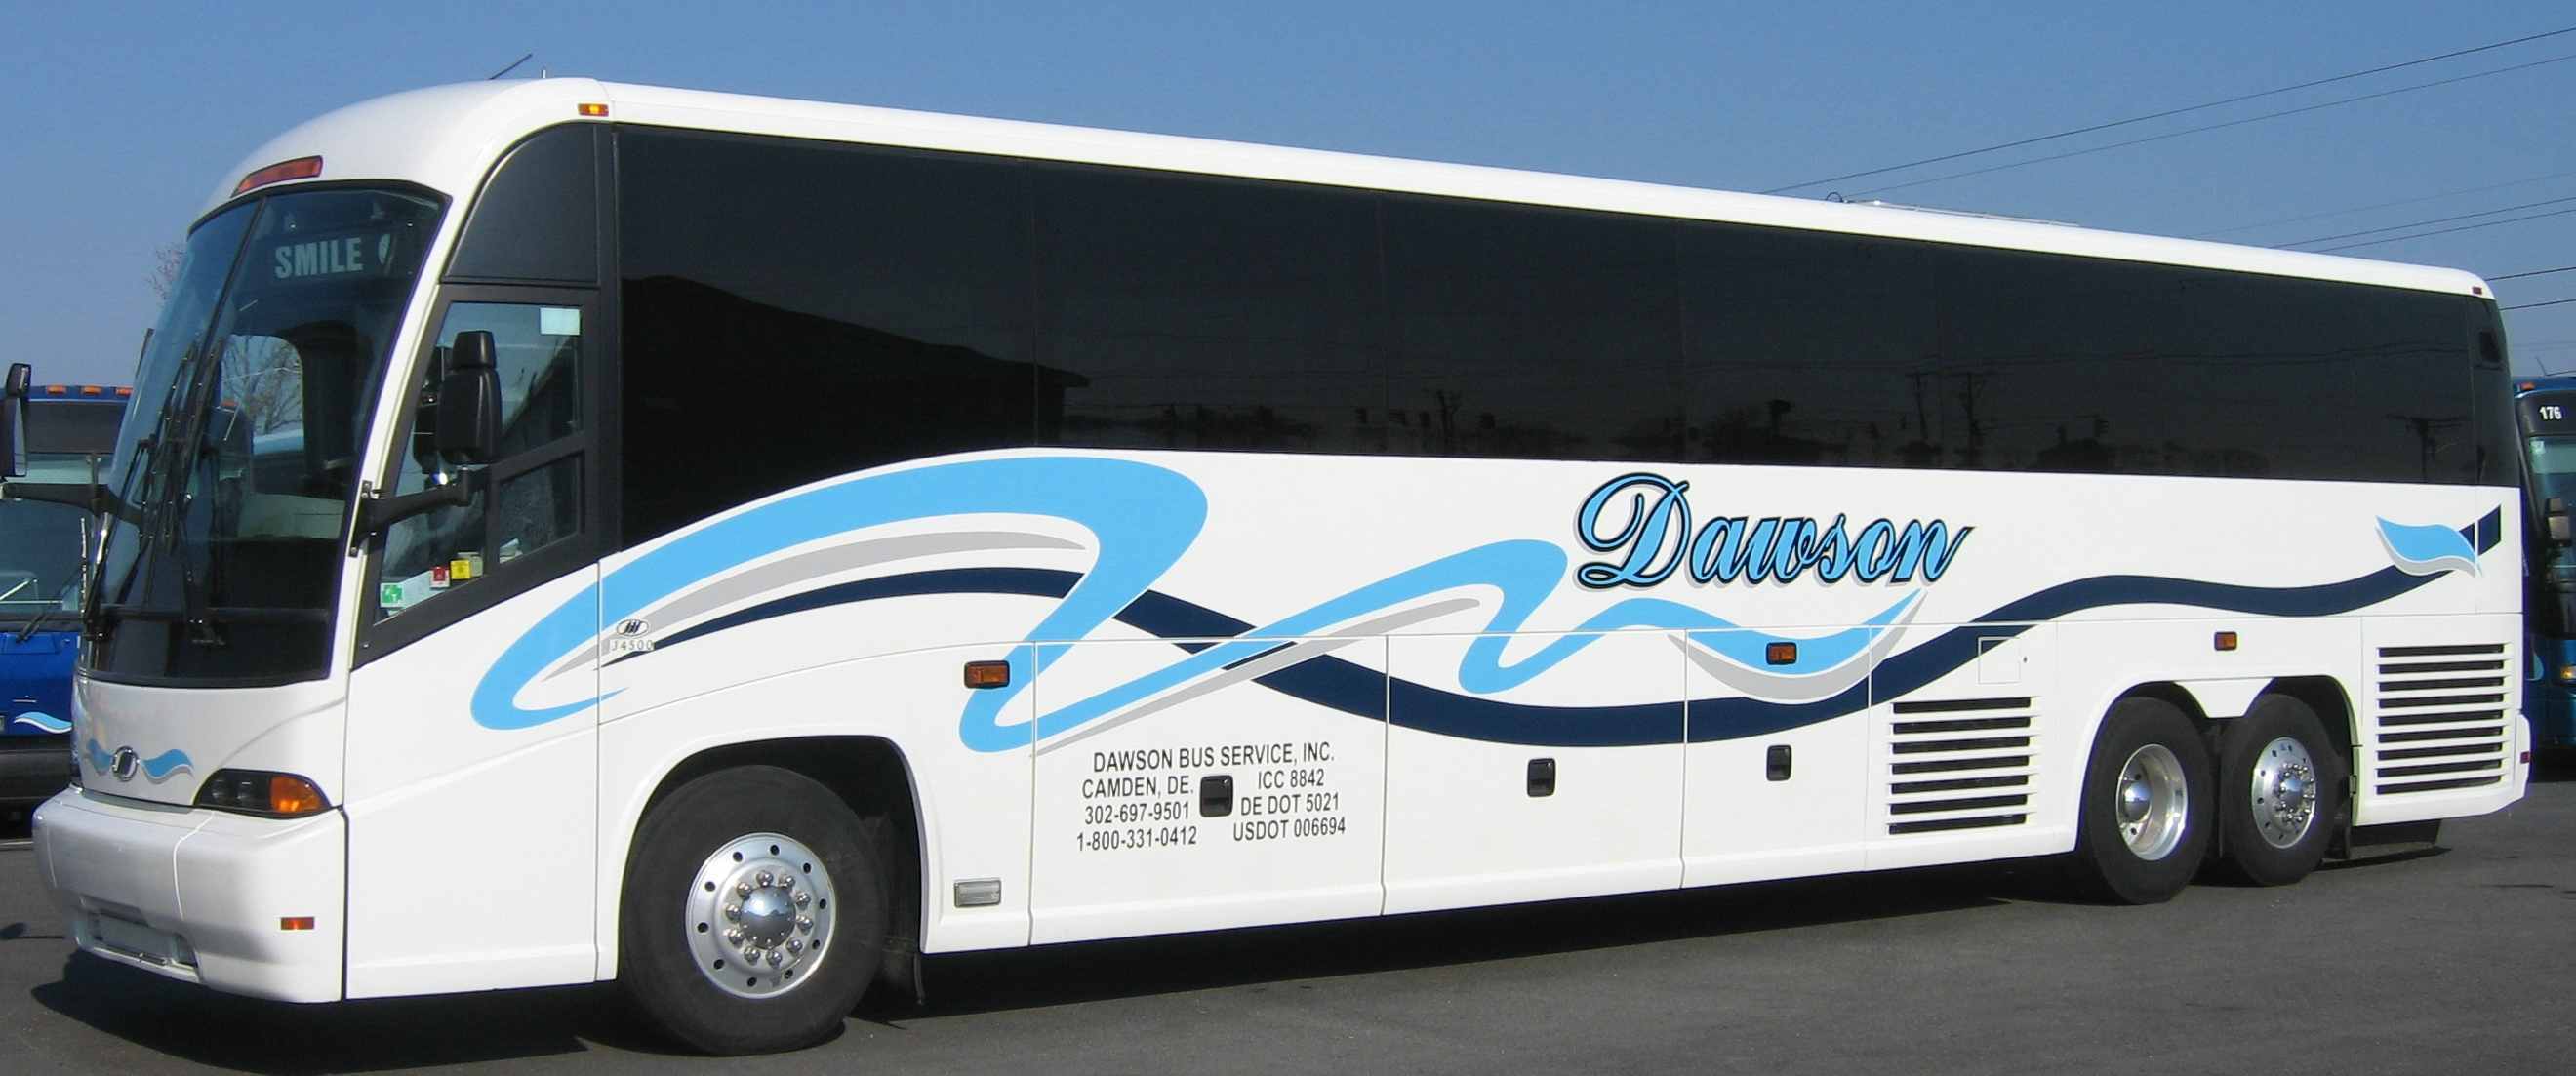 Dawson Bus Service, Inc. 